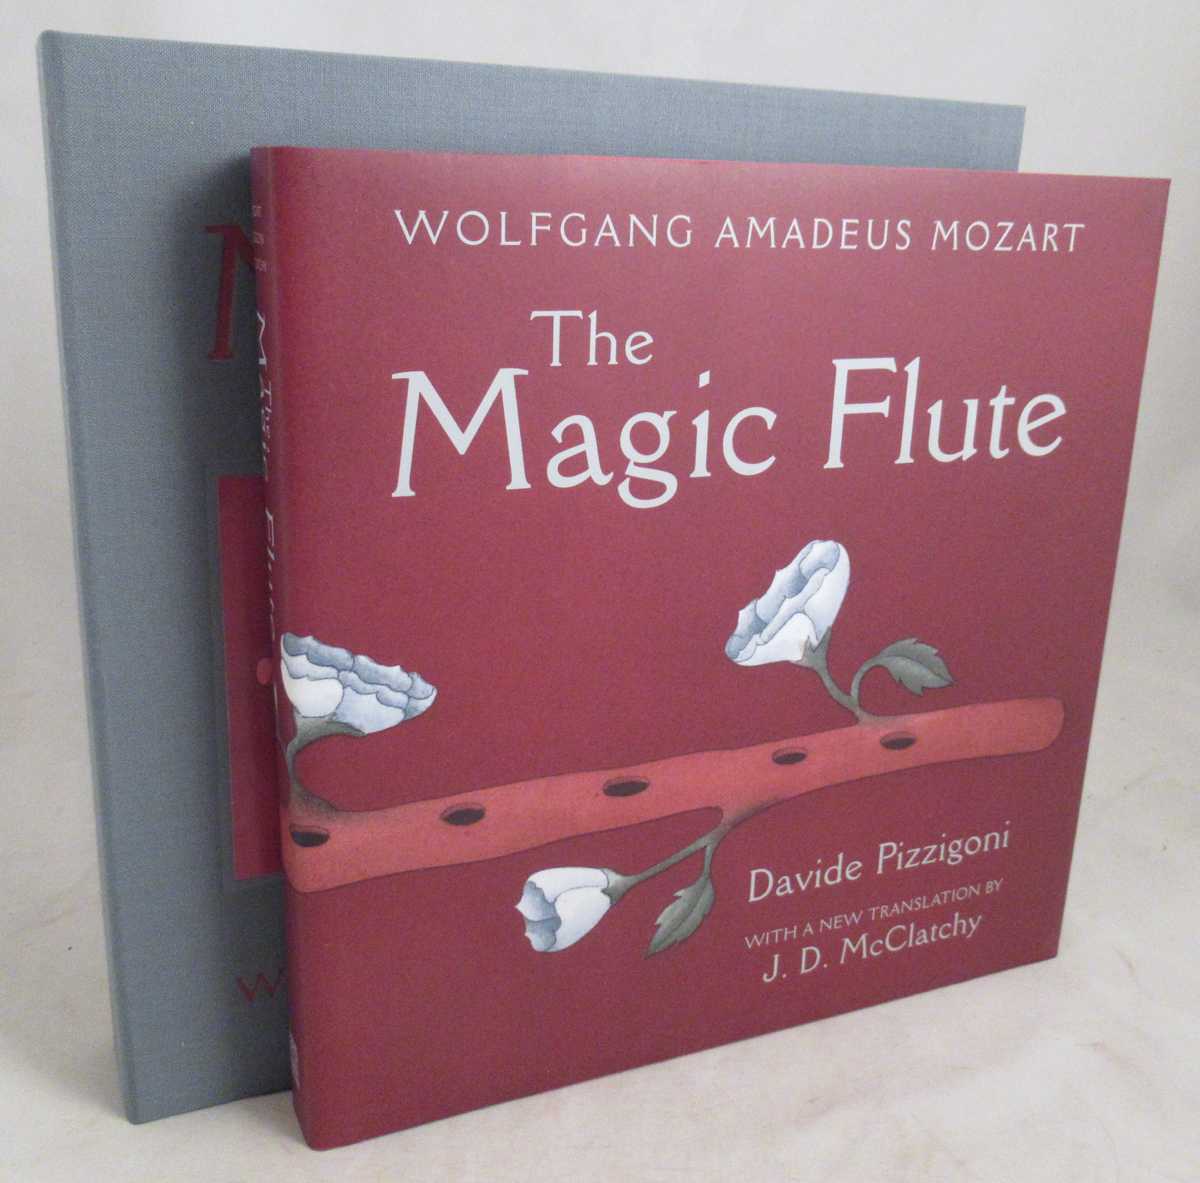 Pizzigoni, Davide; McClatchy, J. D. [translation]; Mozart, Wolfgang Amadeus - The Magic Flute